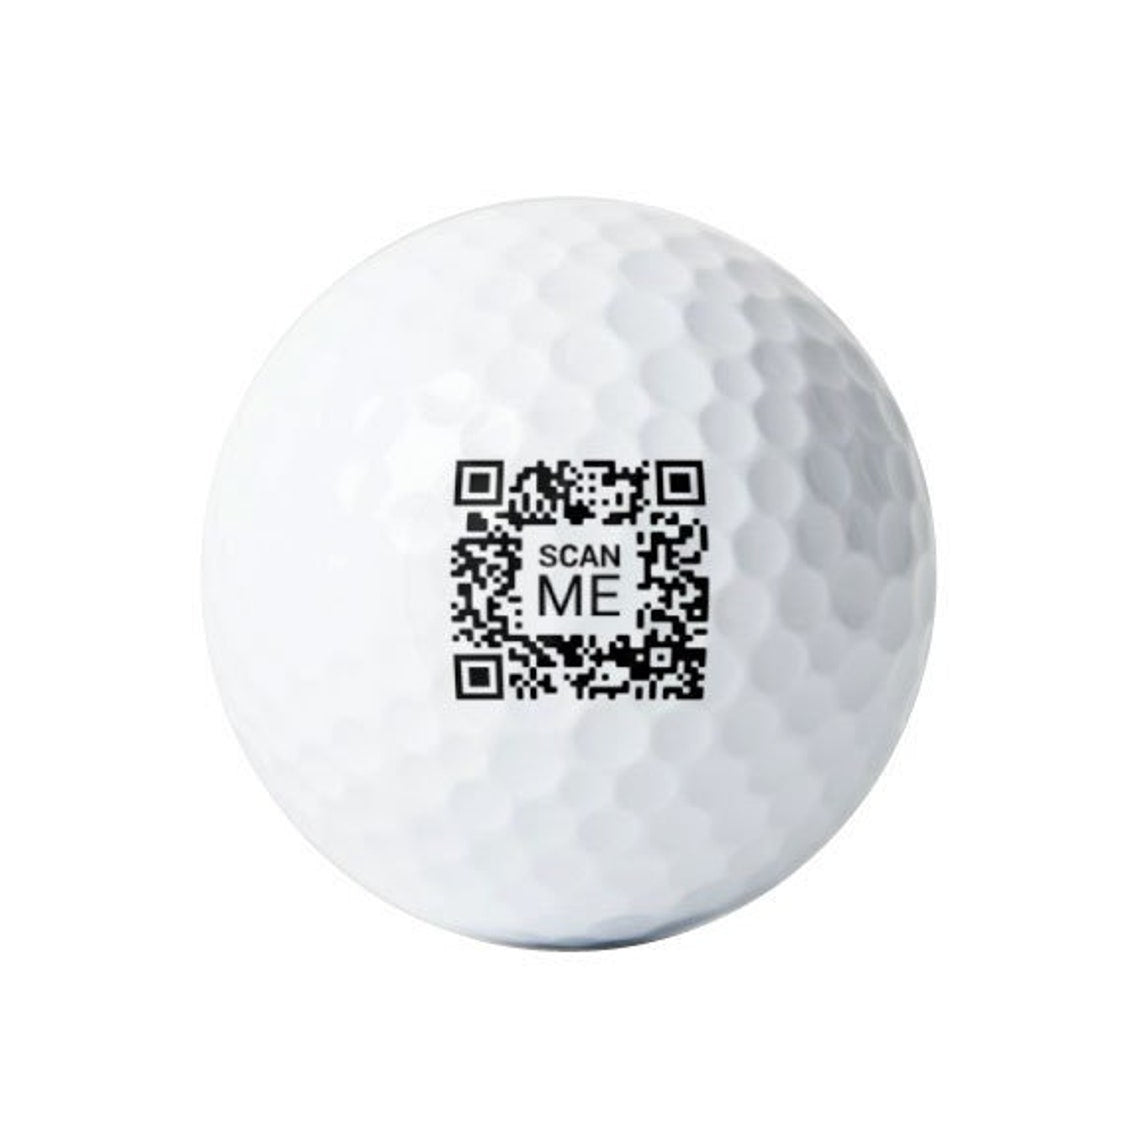 Custom QR code Golf Balls 3-Pack Printed White Golf Balls